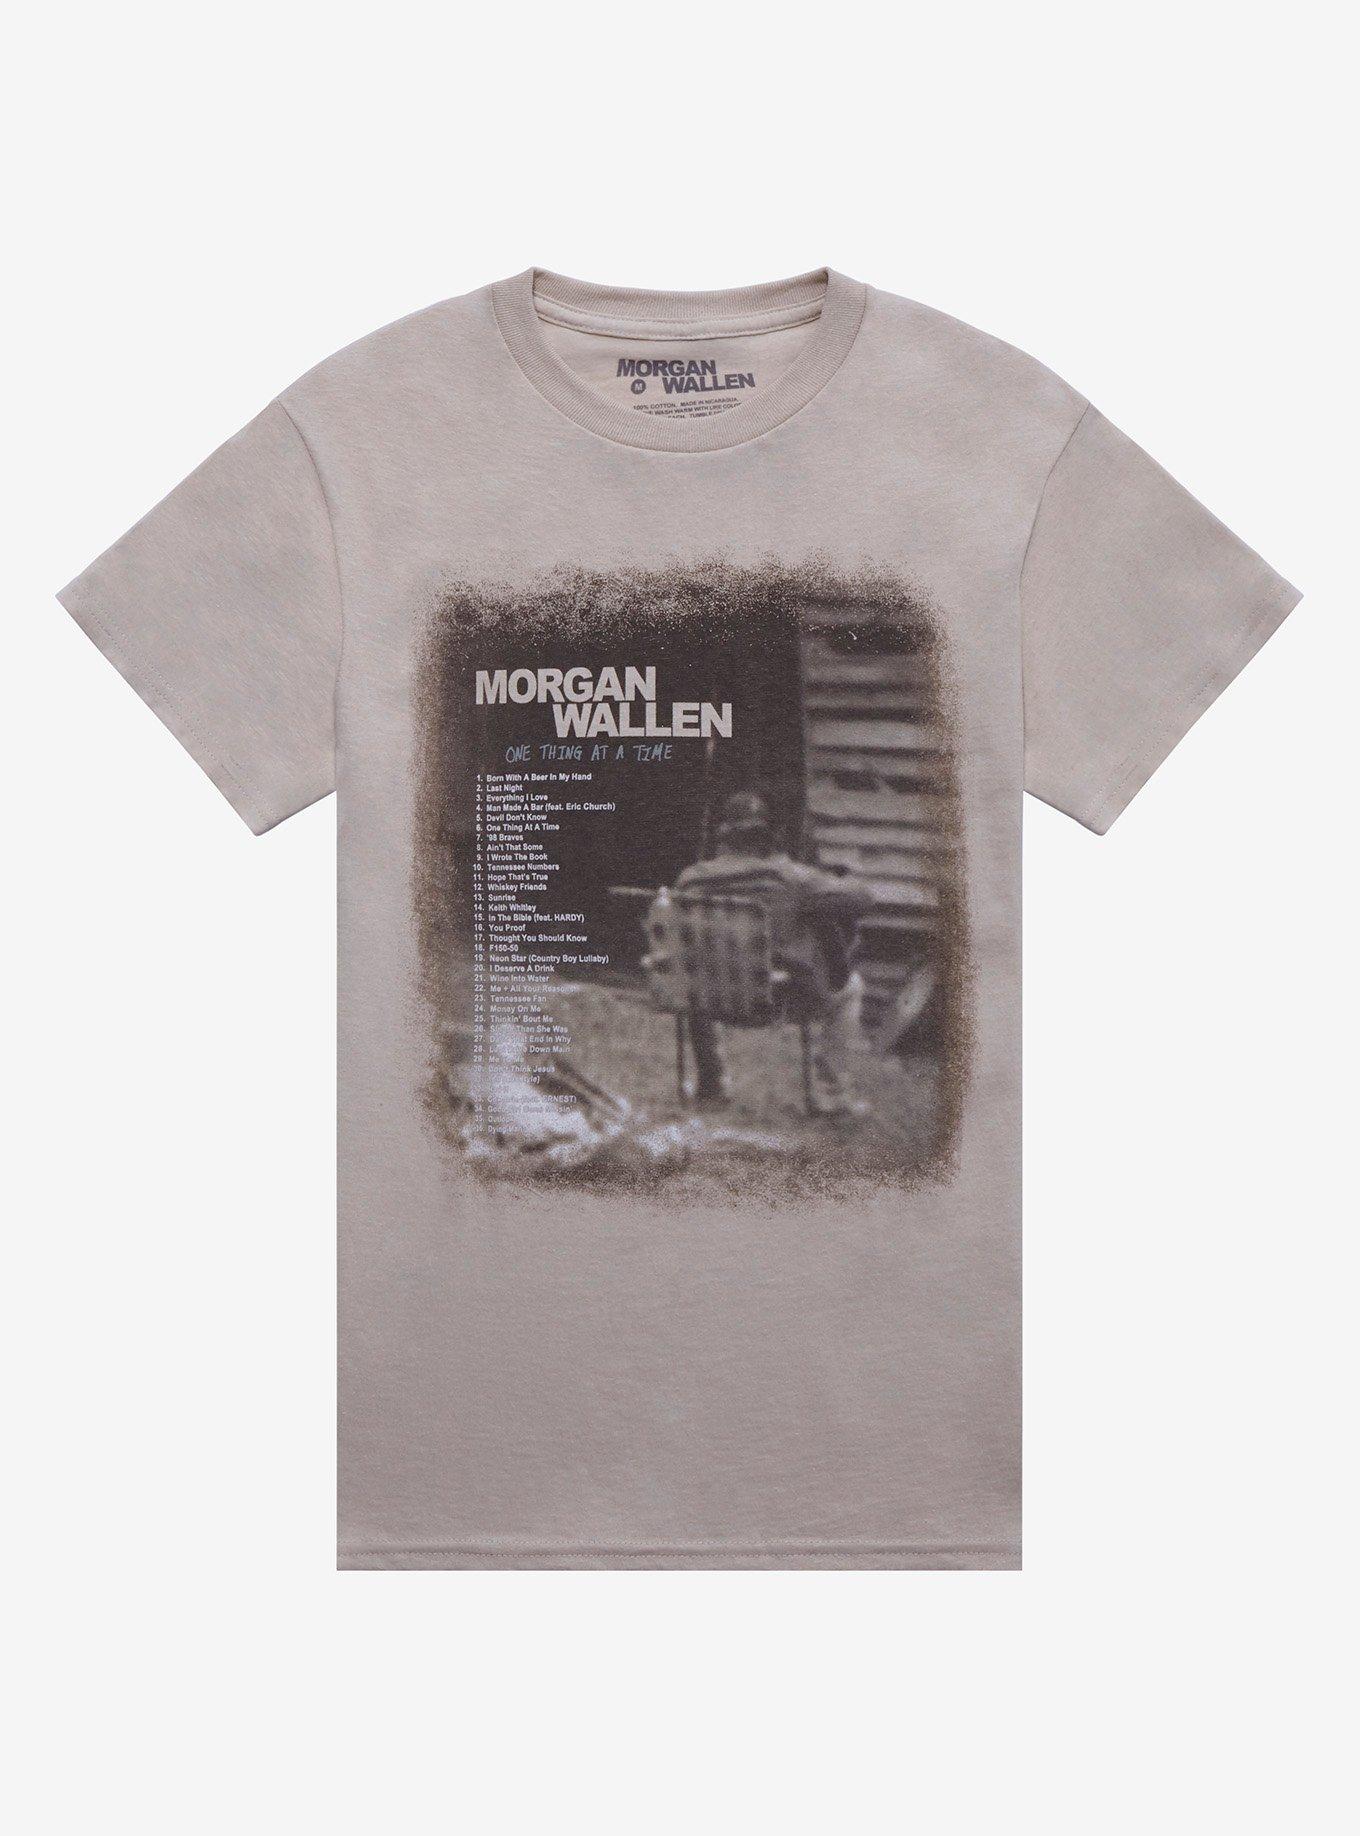 One Thing At A Time Album Shirt, Morgan Wallen Shirt